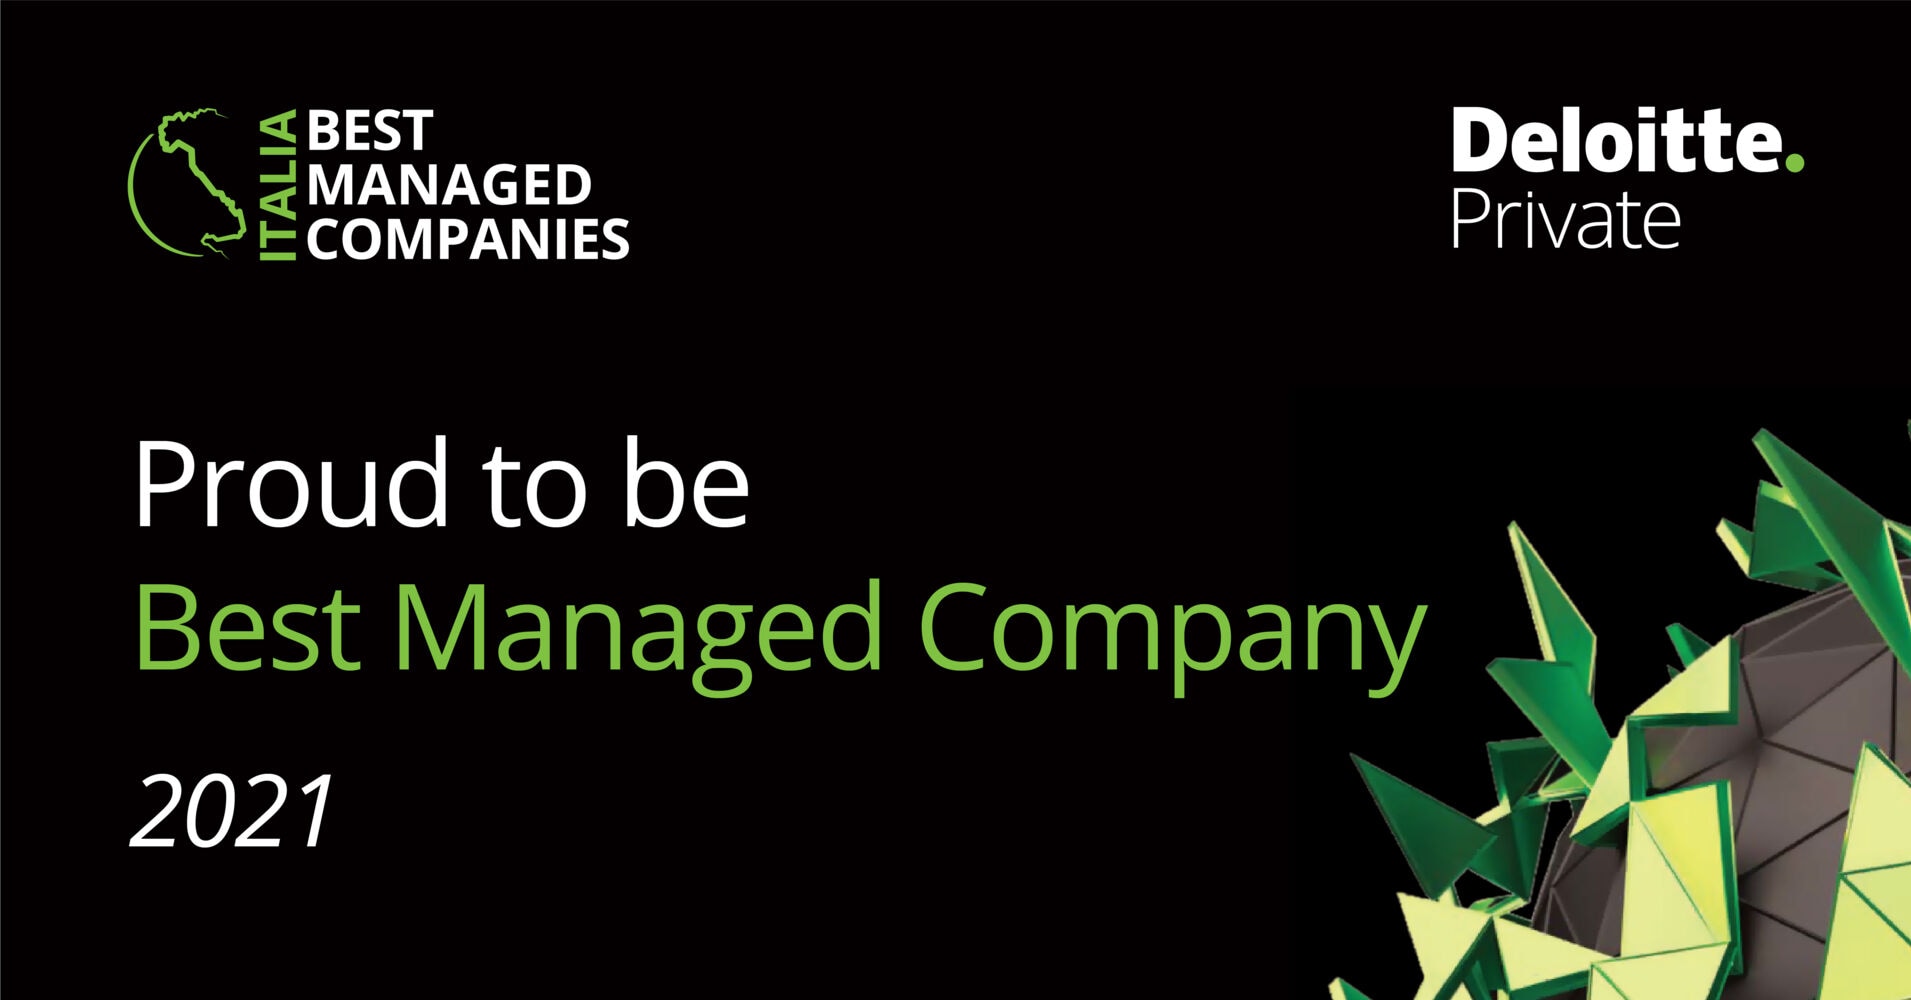 Scm Group has won the “Best Managed Companies” Awar